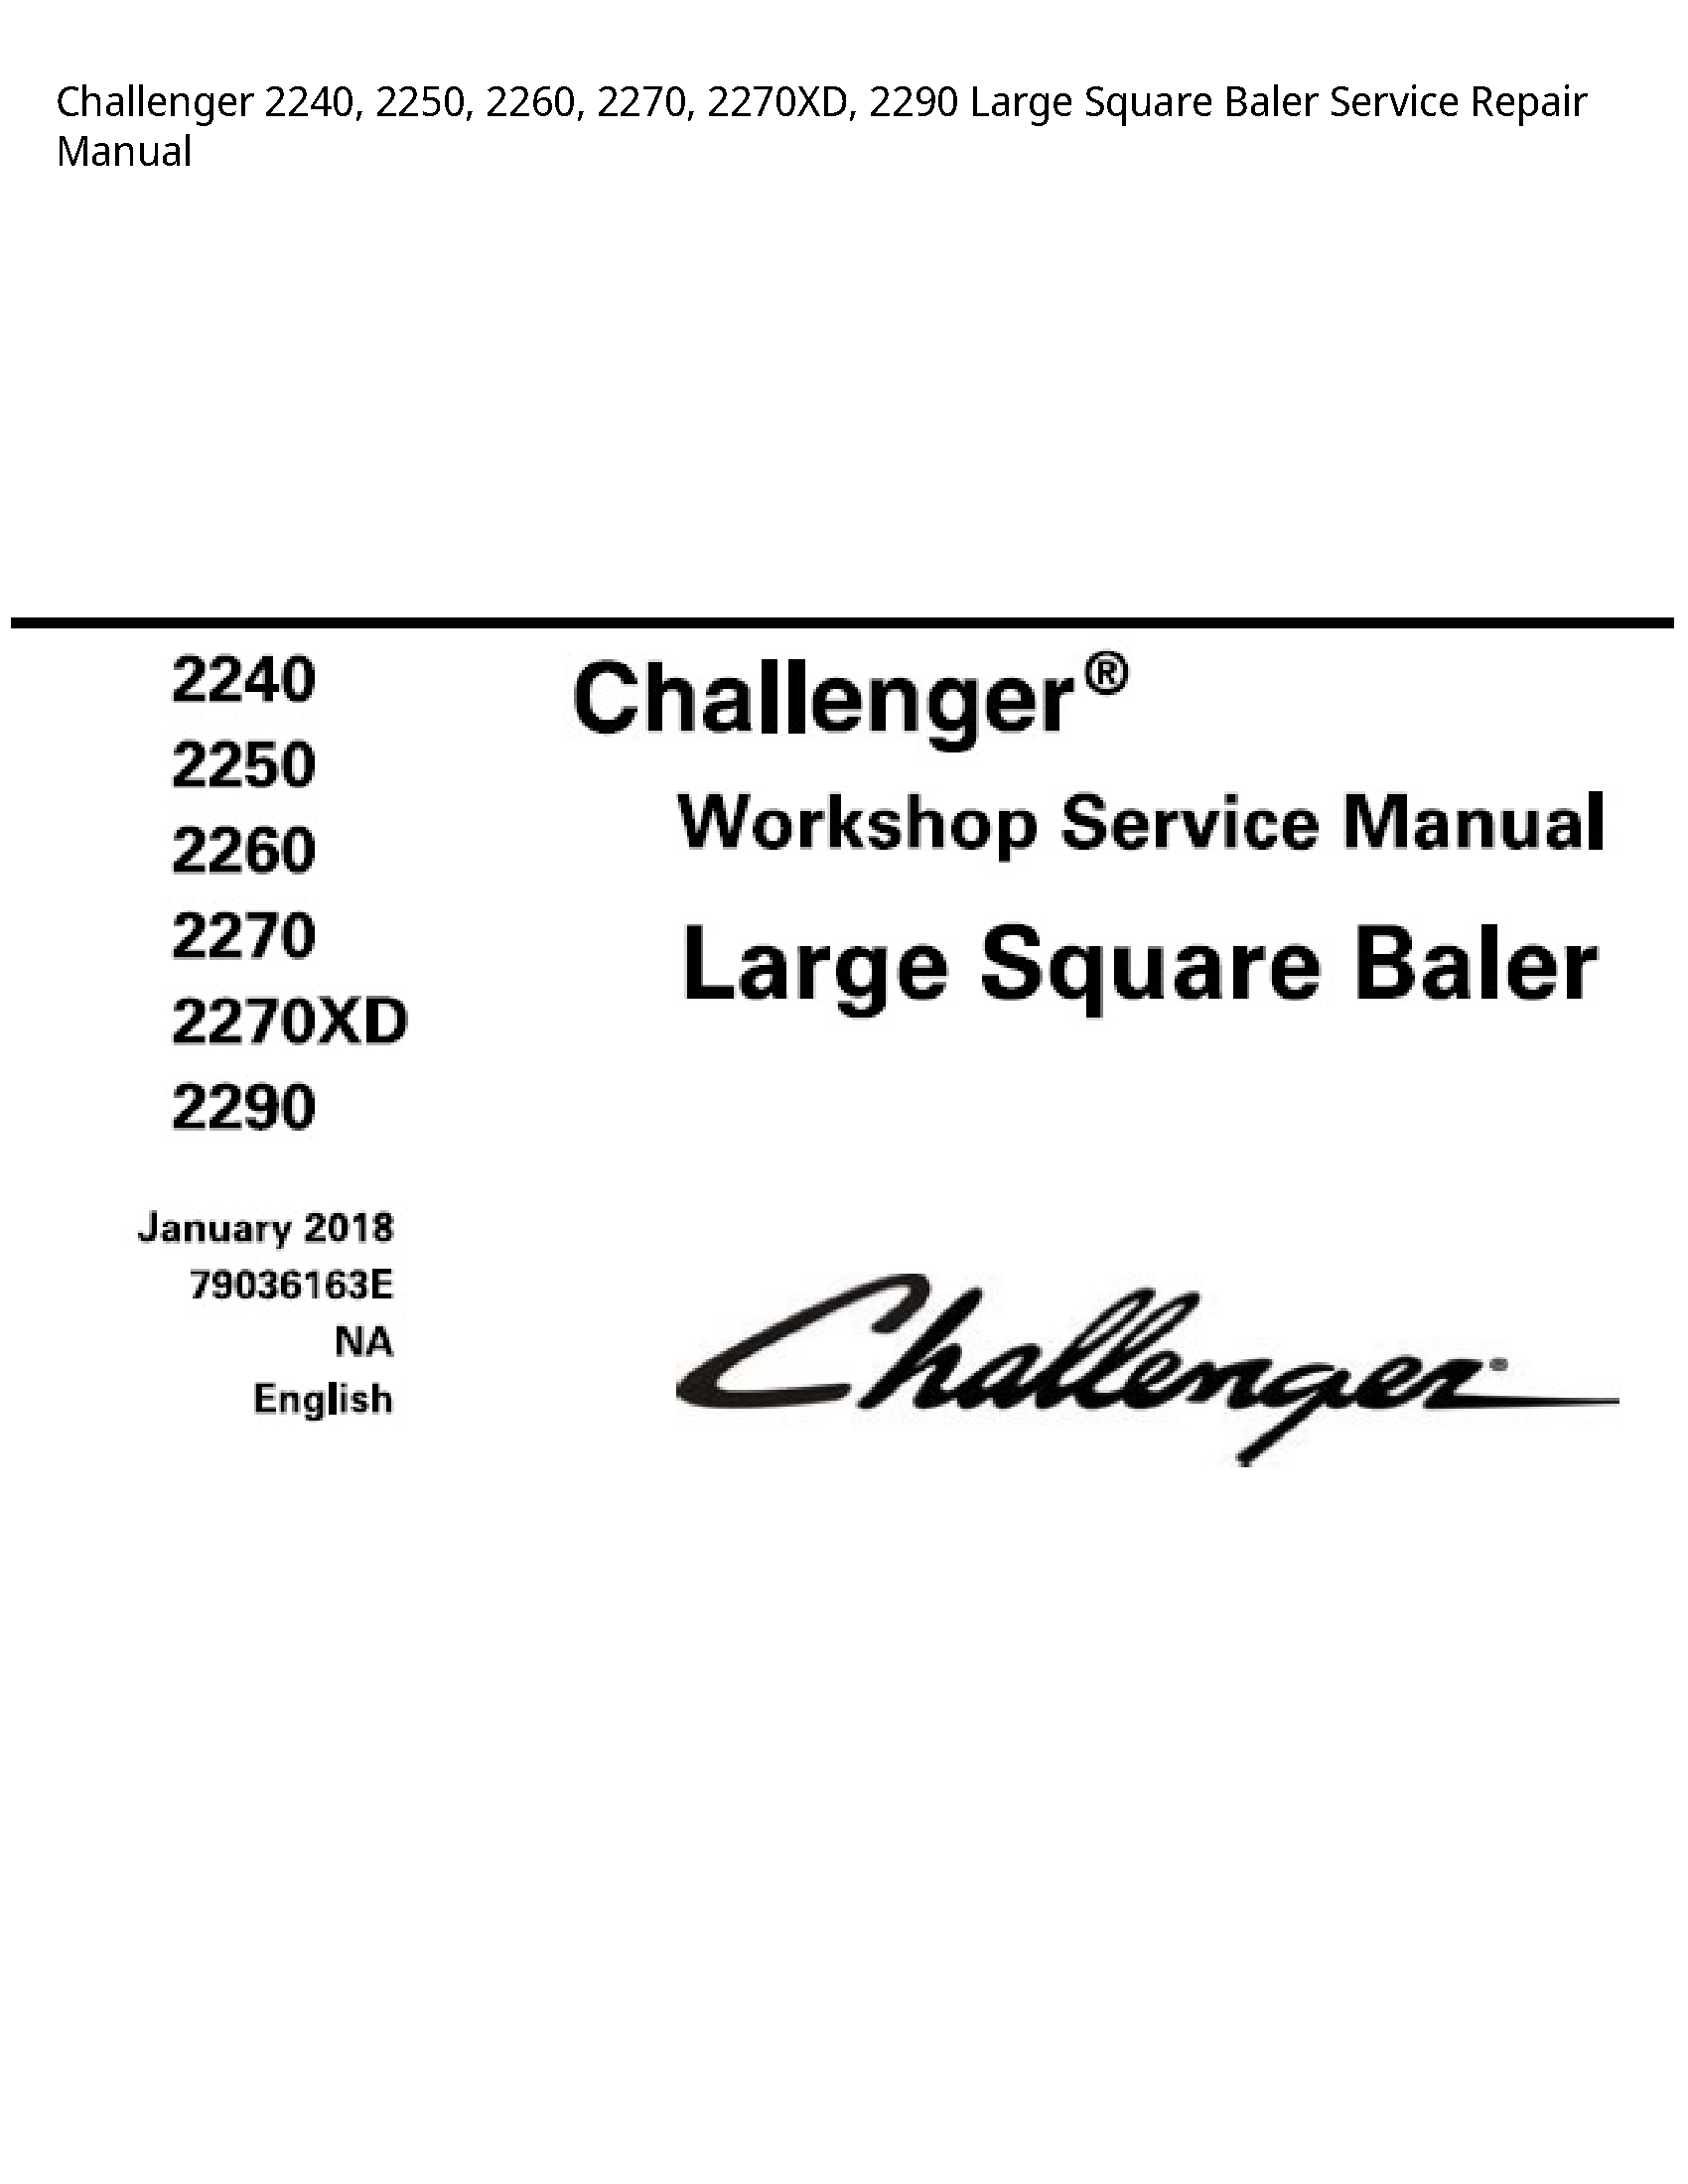 Challenger 2240 Large Square Baler manual